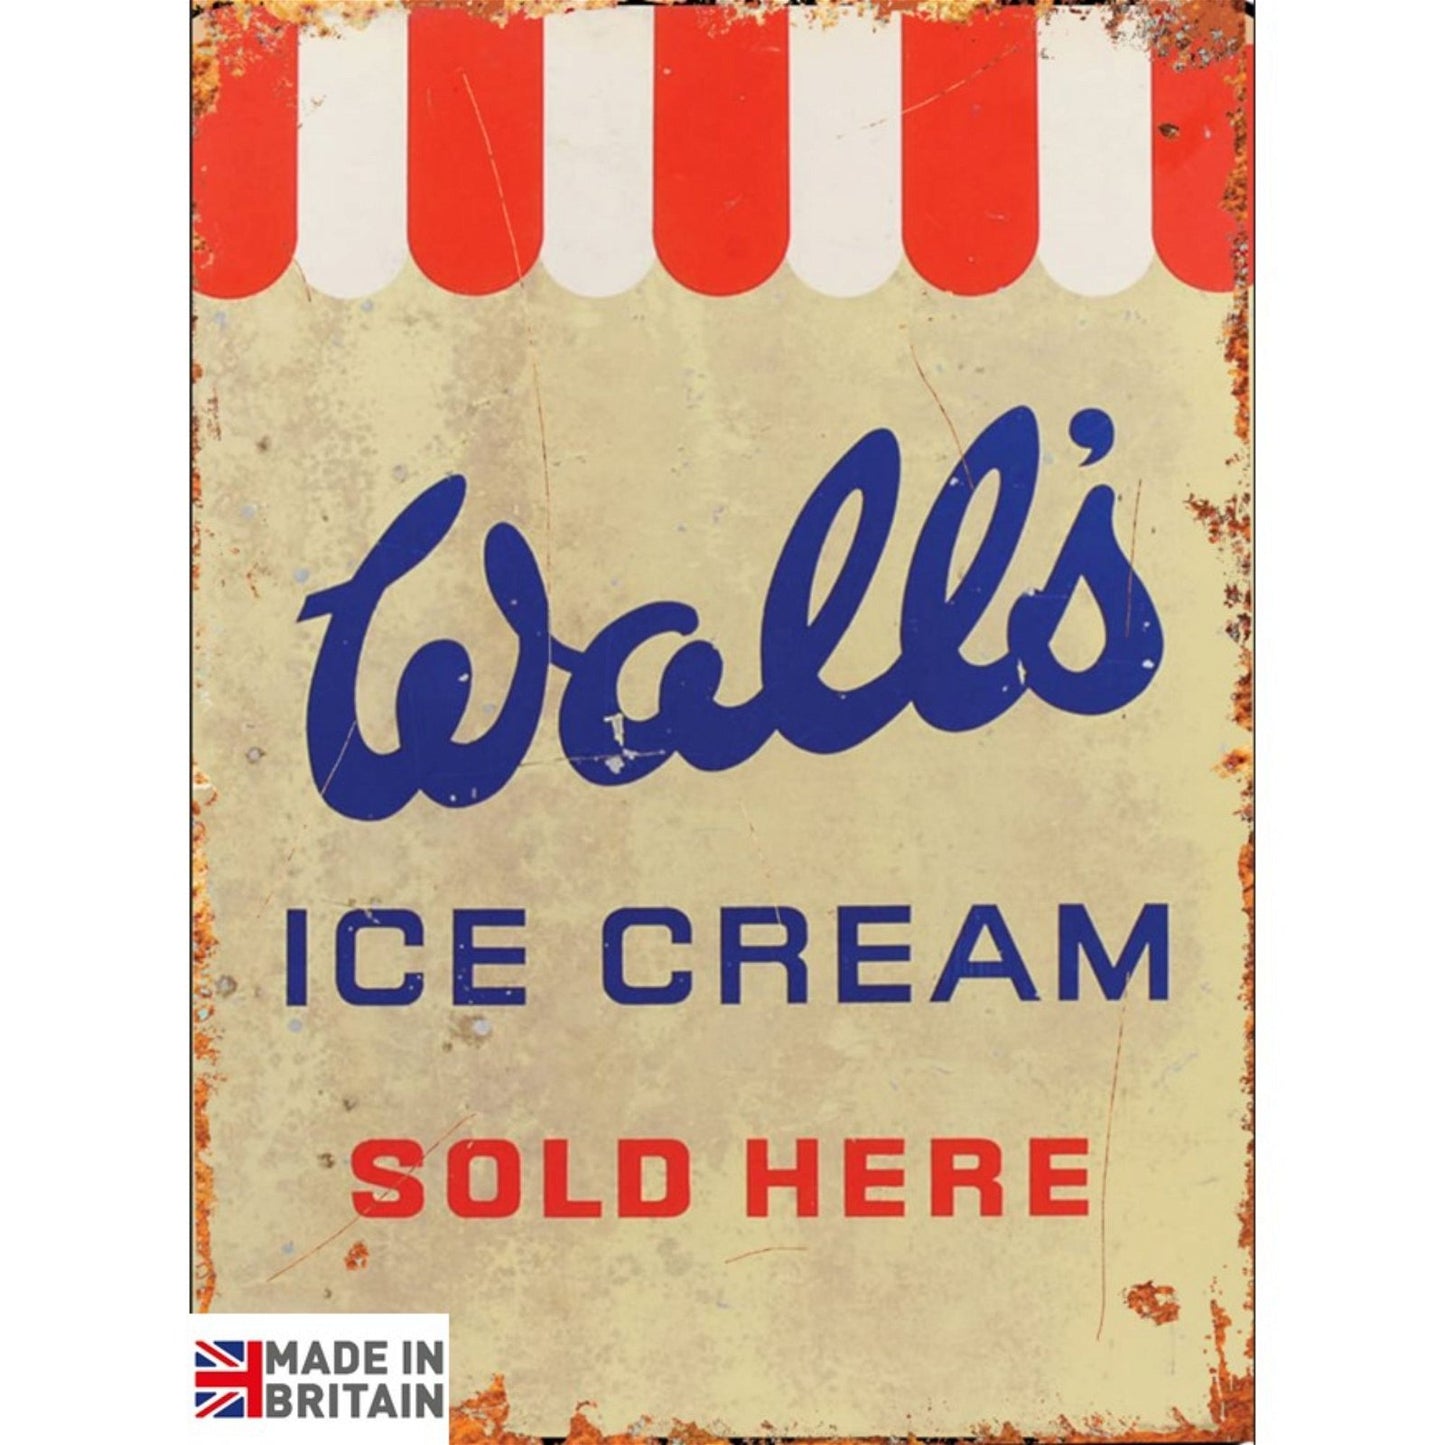 Small Metal Sign 45 x 37.5cm Walls Ice Cream